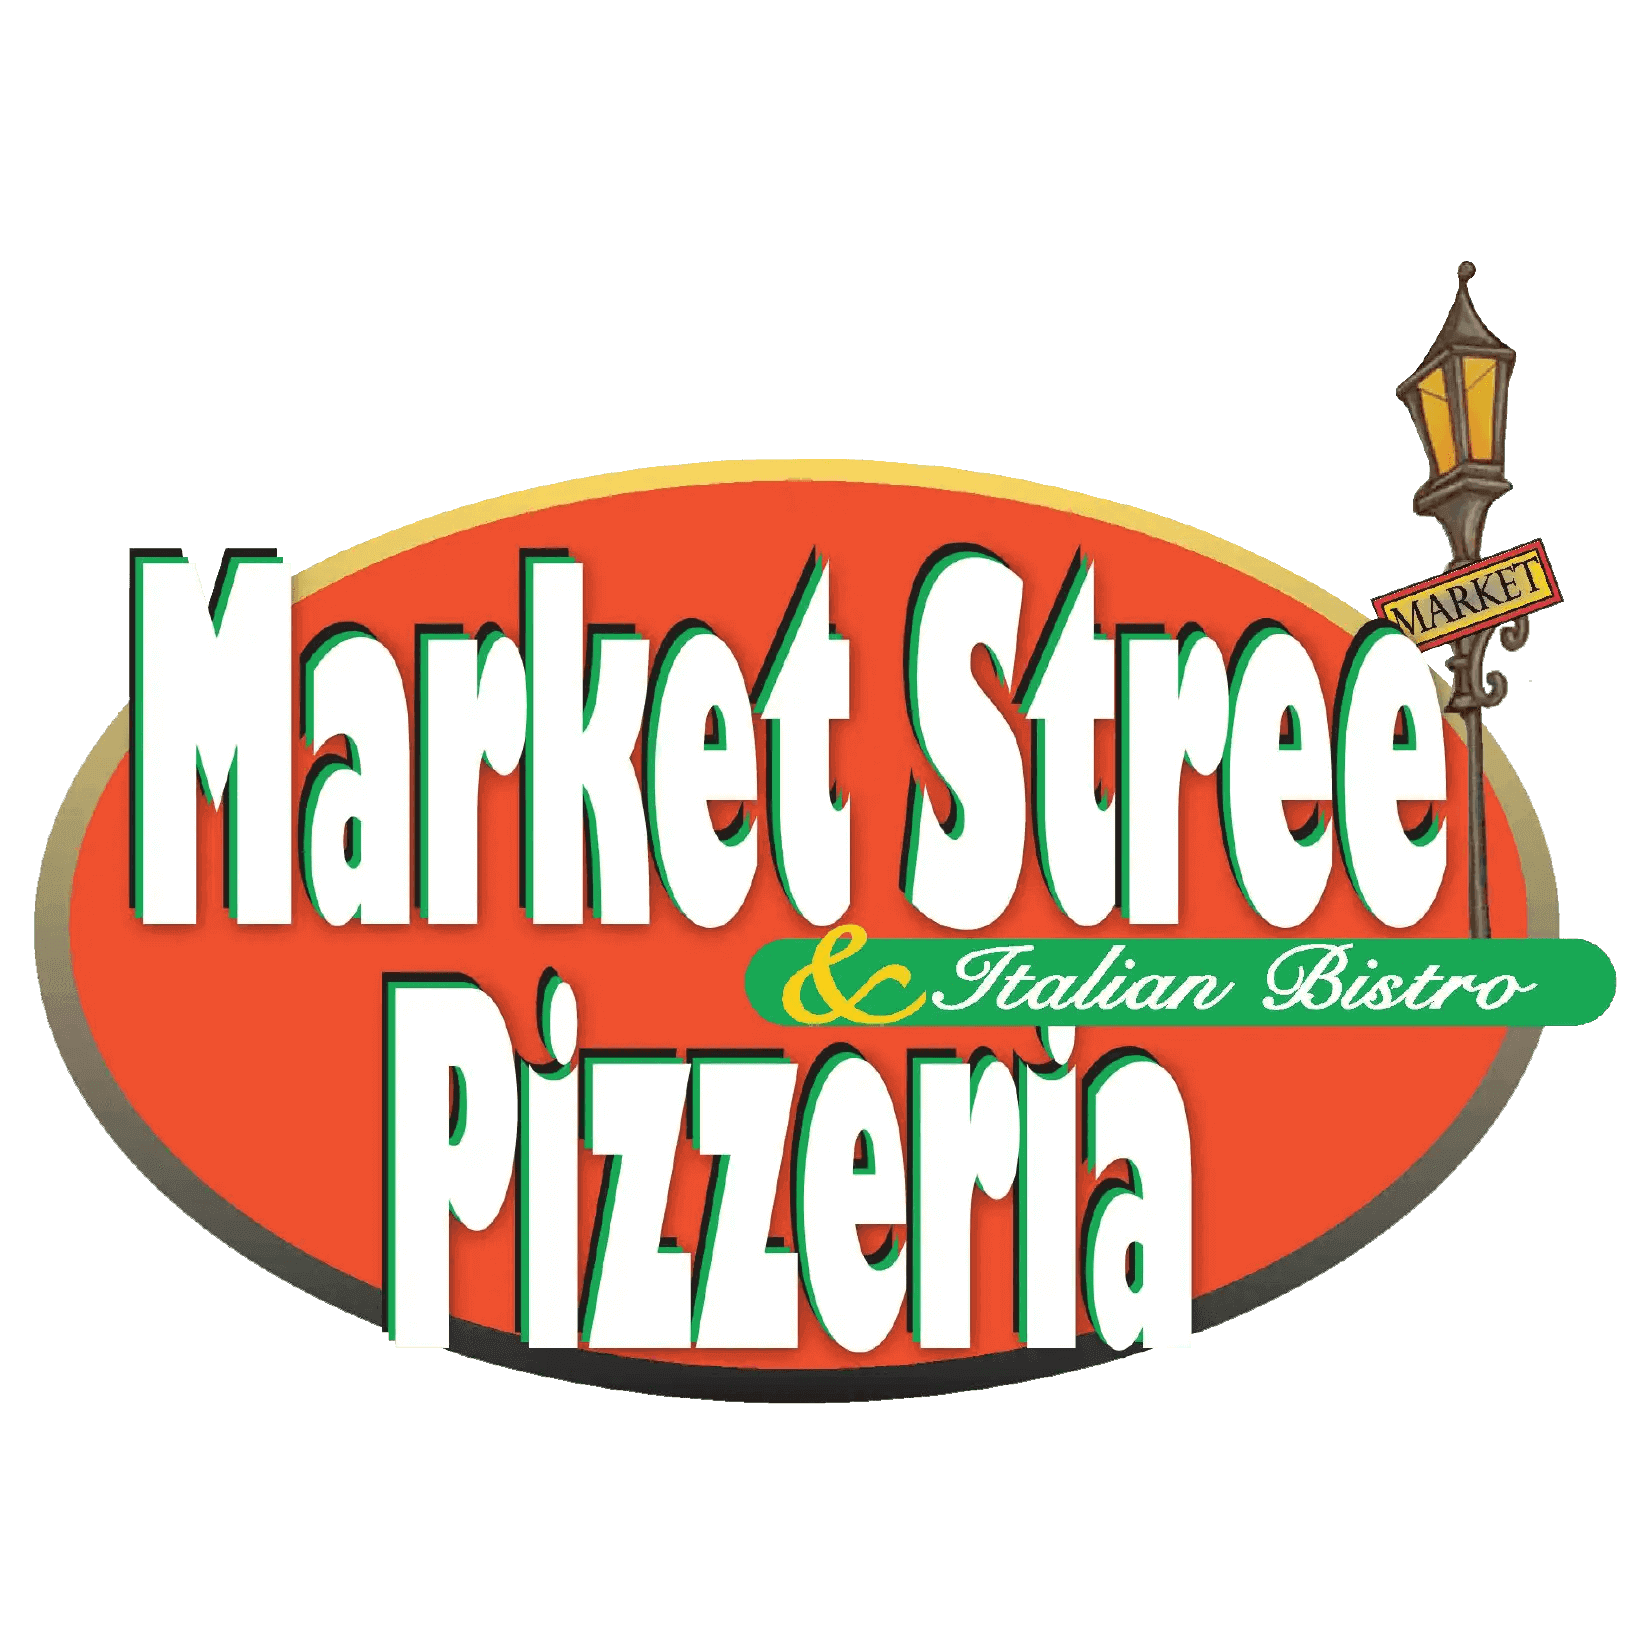 Market Street Pizzeria logo